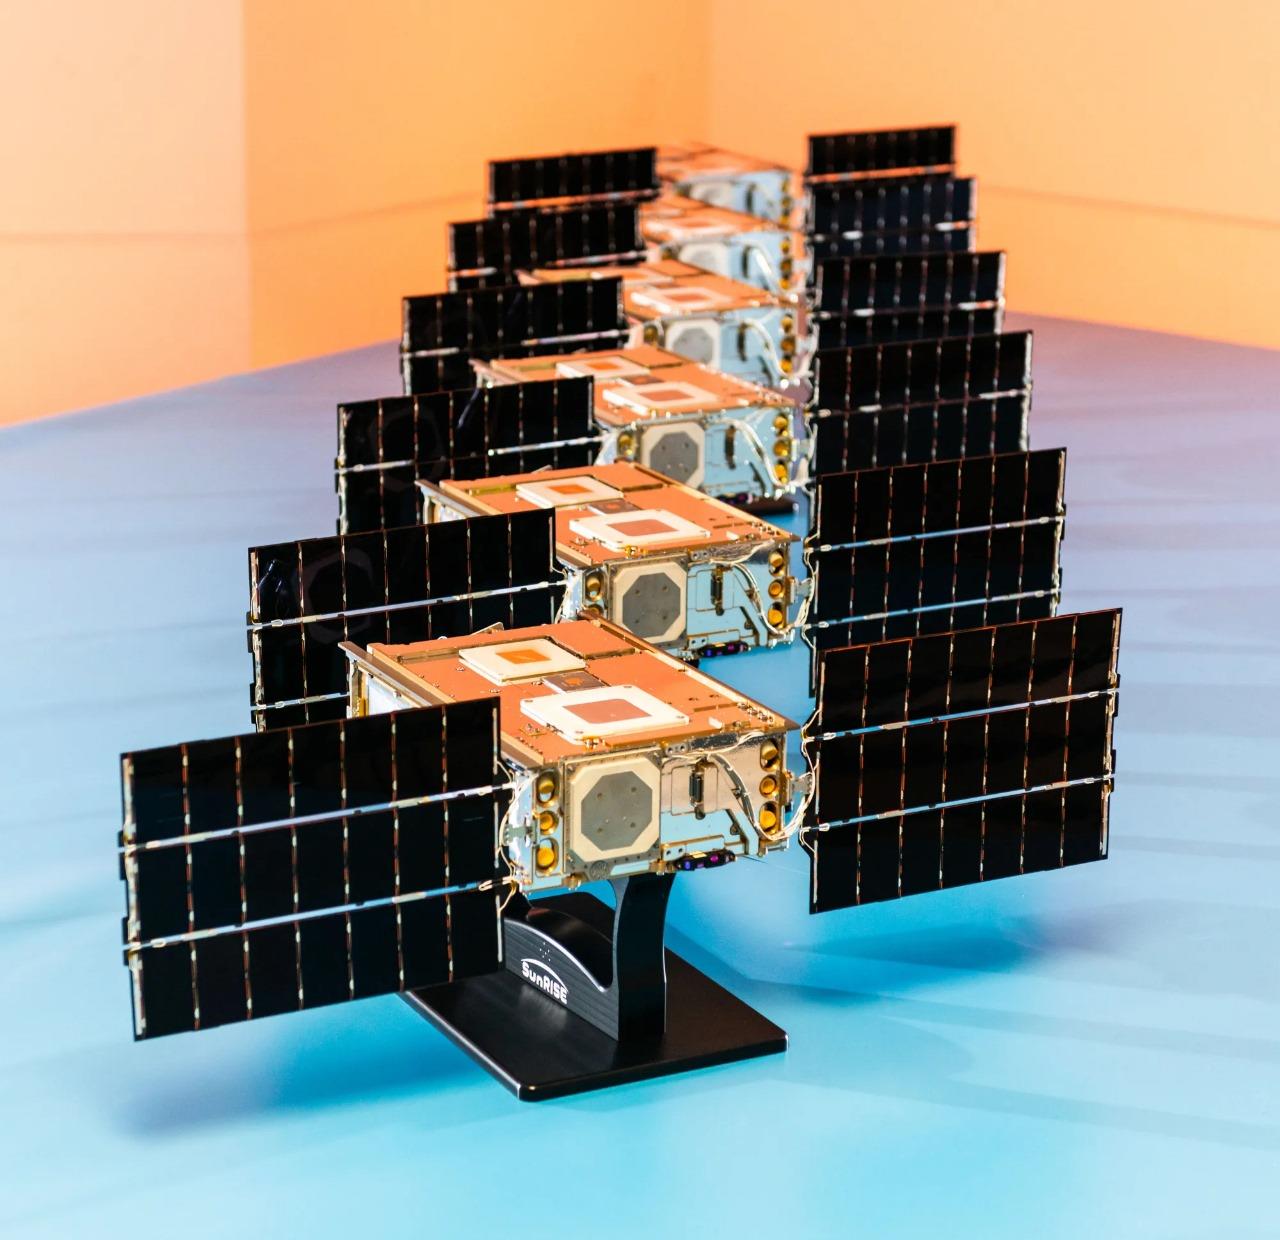 NASA Develops 6 Cereal Box-Size Satellites To Study Solar Radio Bursts